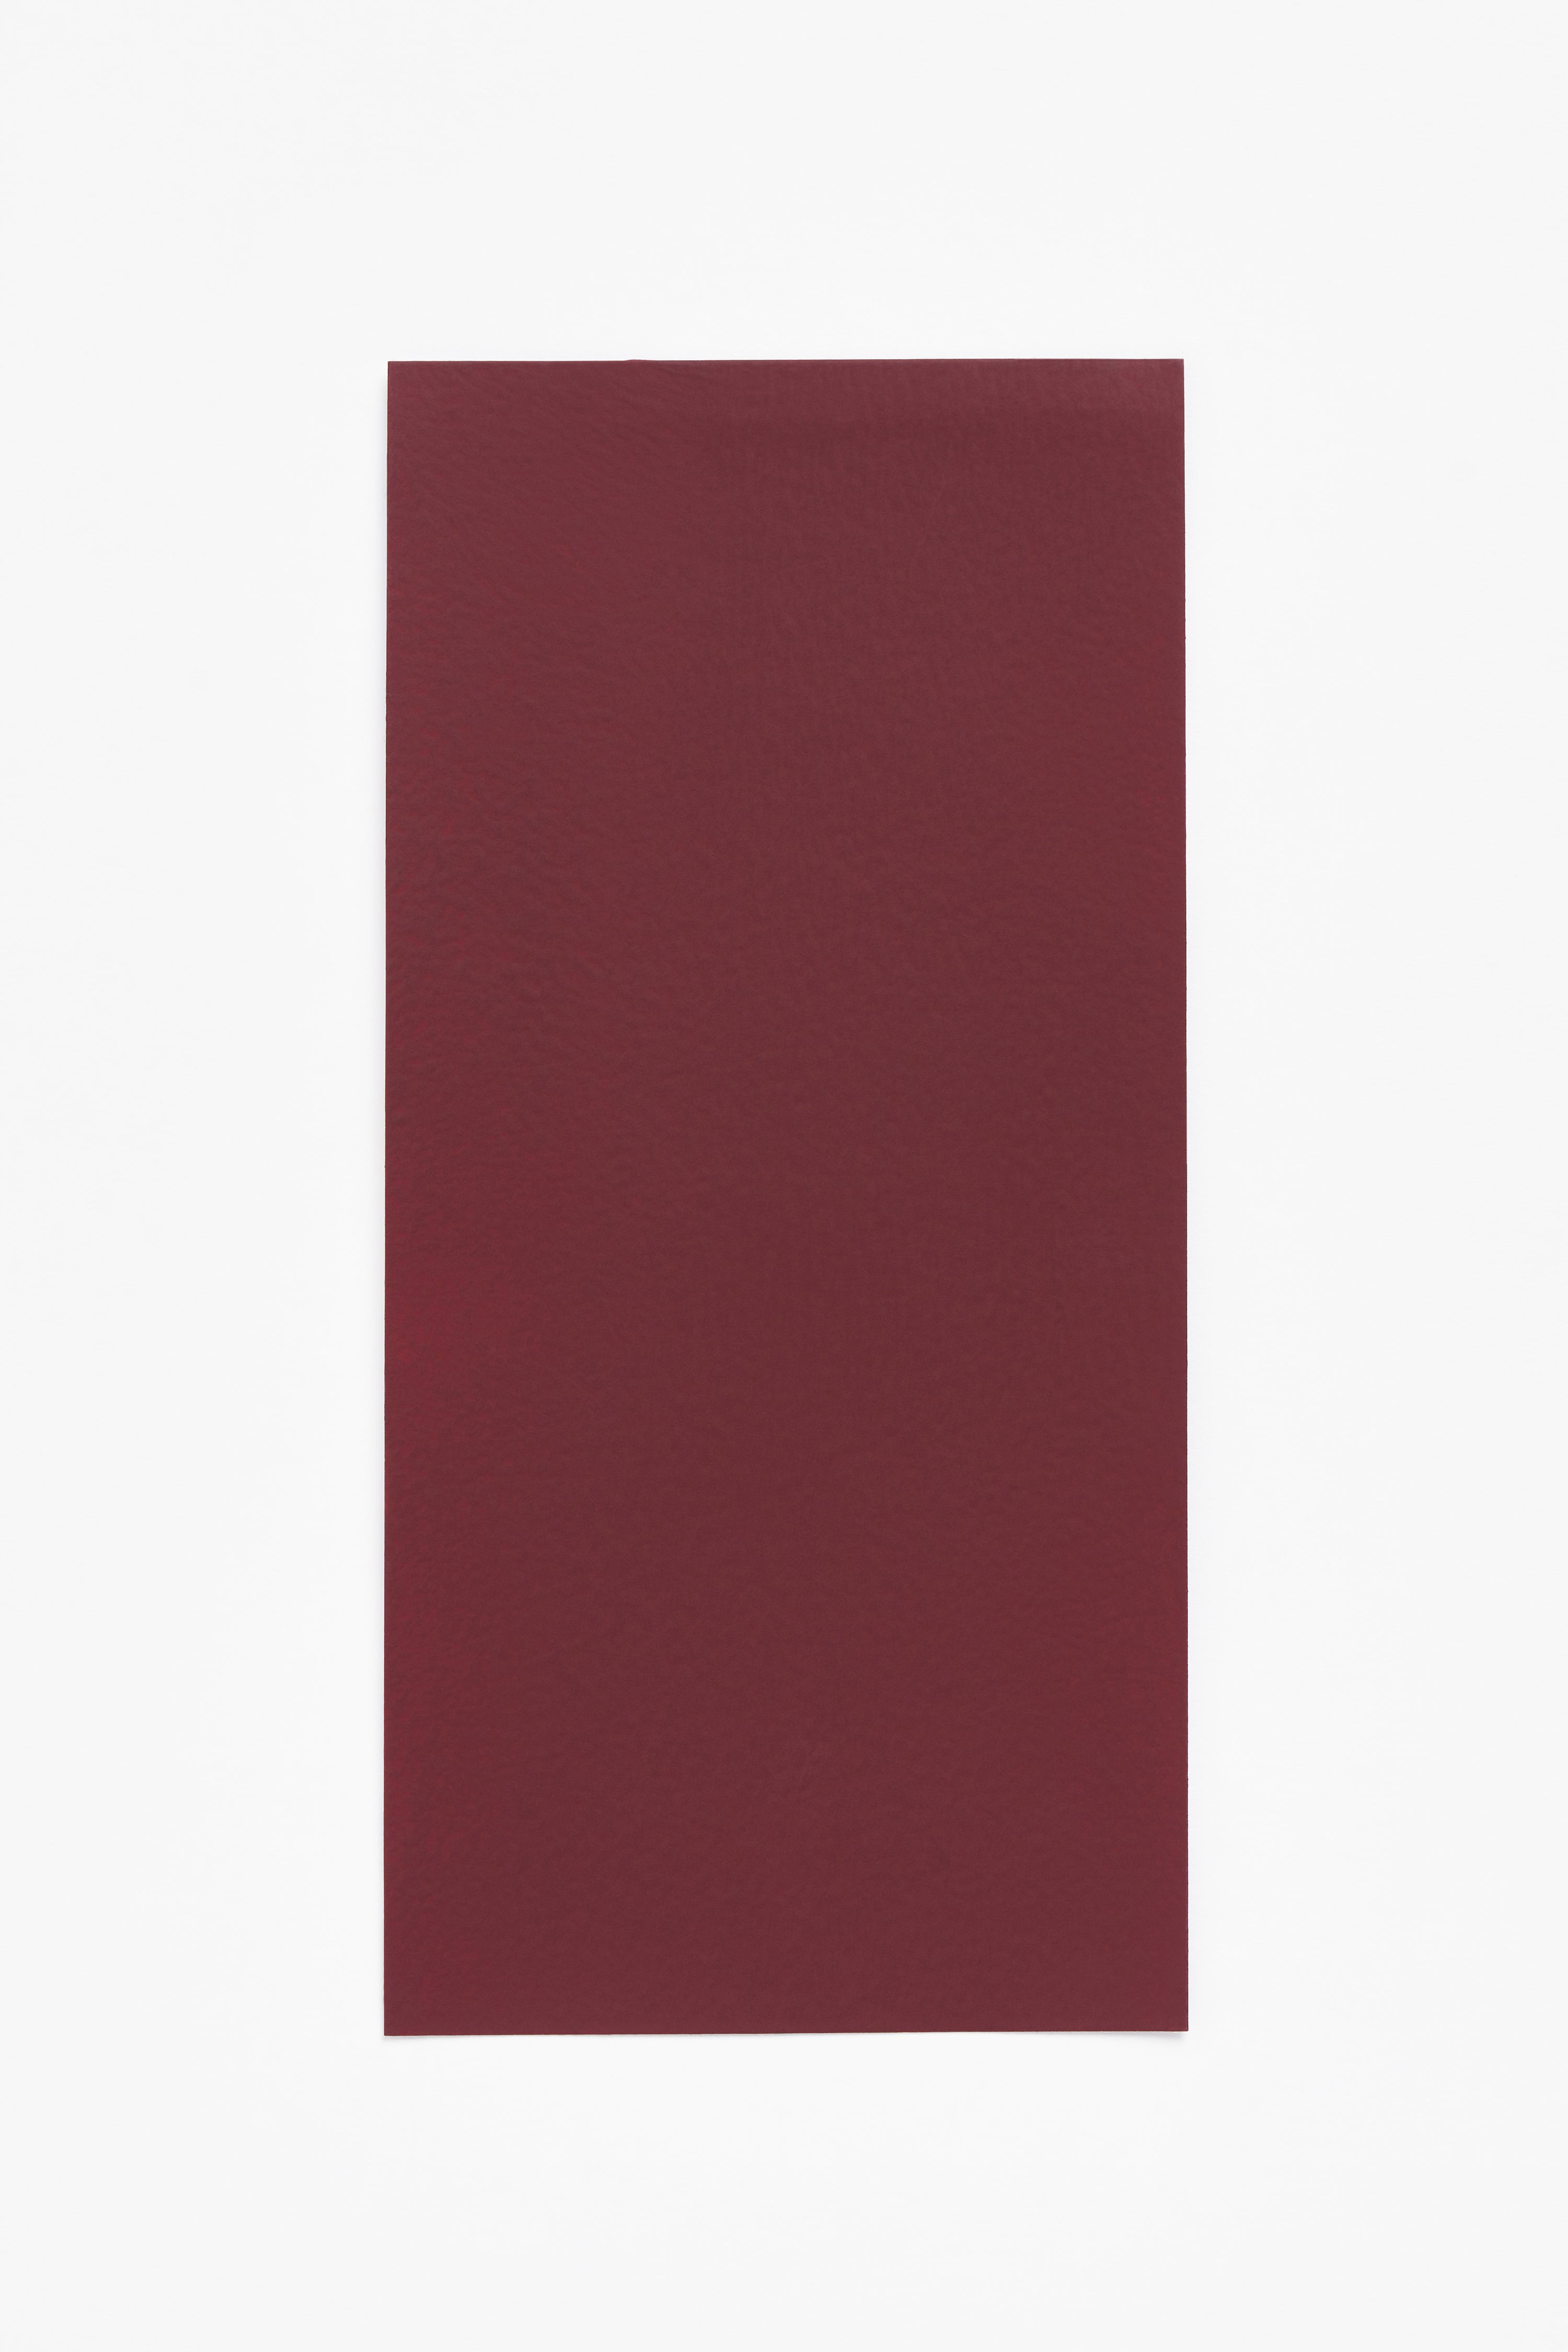 Paris Red — a paint colour developed by Halleroed for Blēo